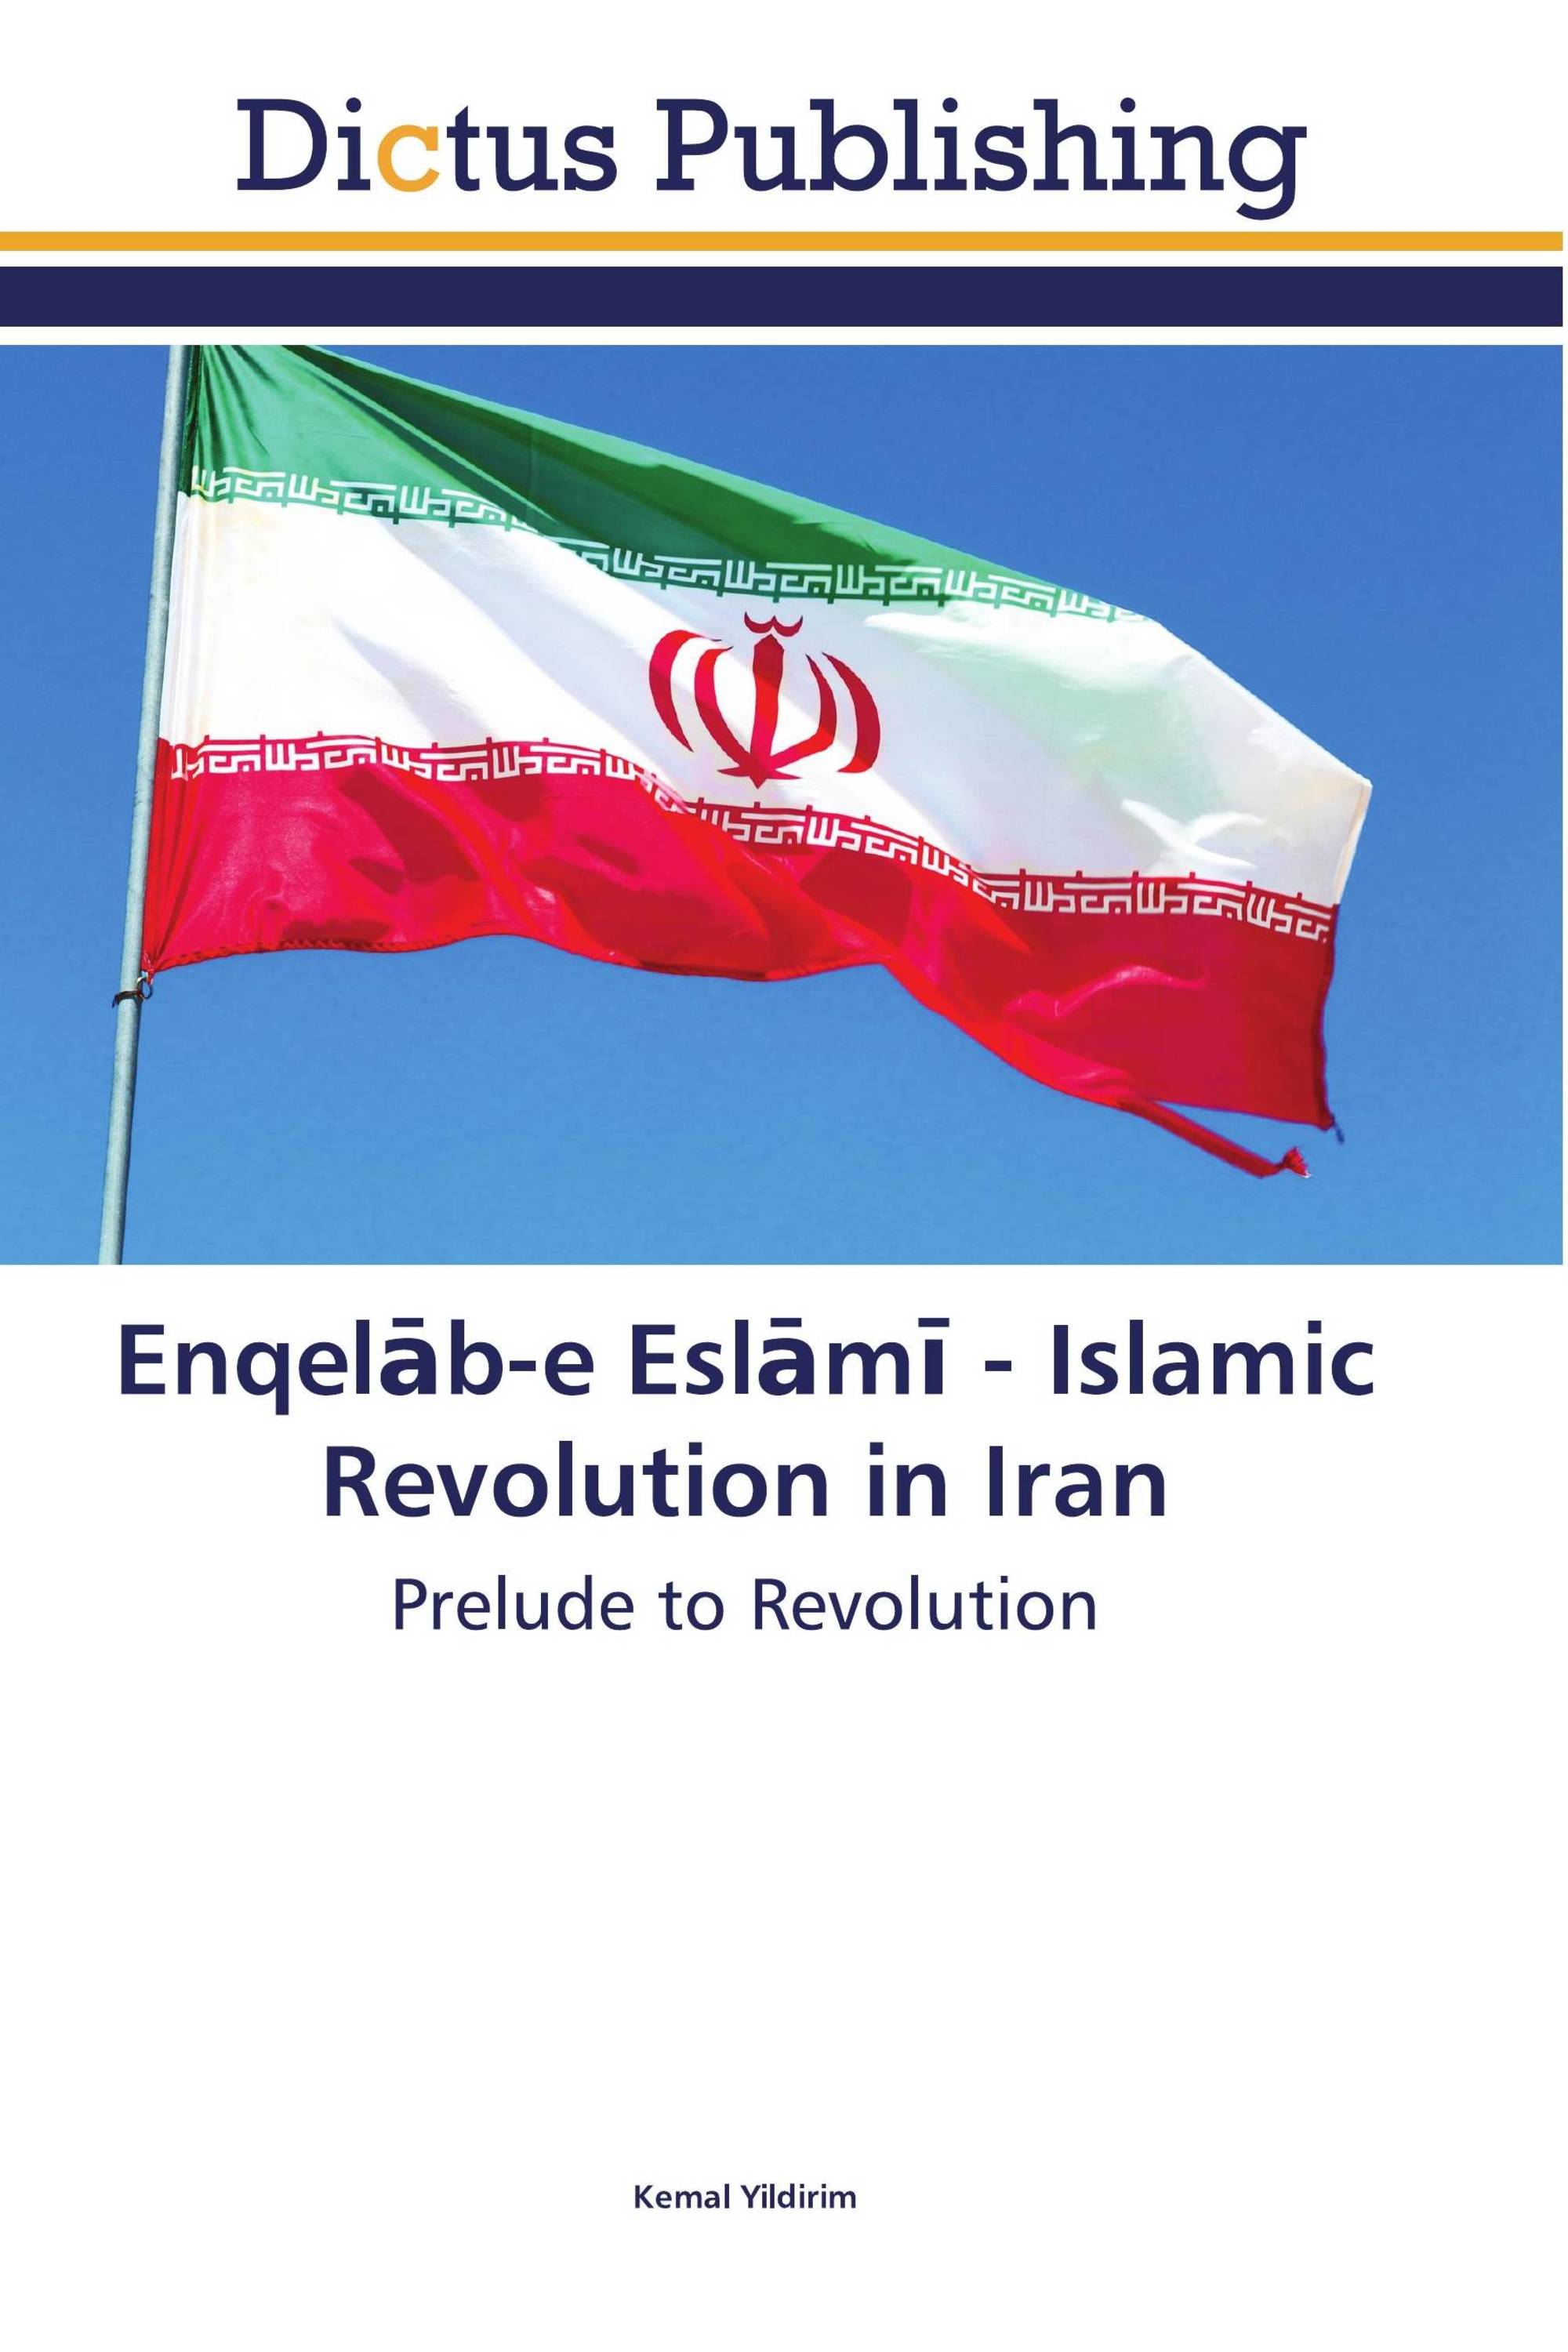 Enqelāb-e Eslāmī - Islamic Revolution in Iran